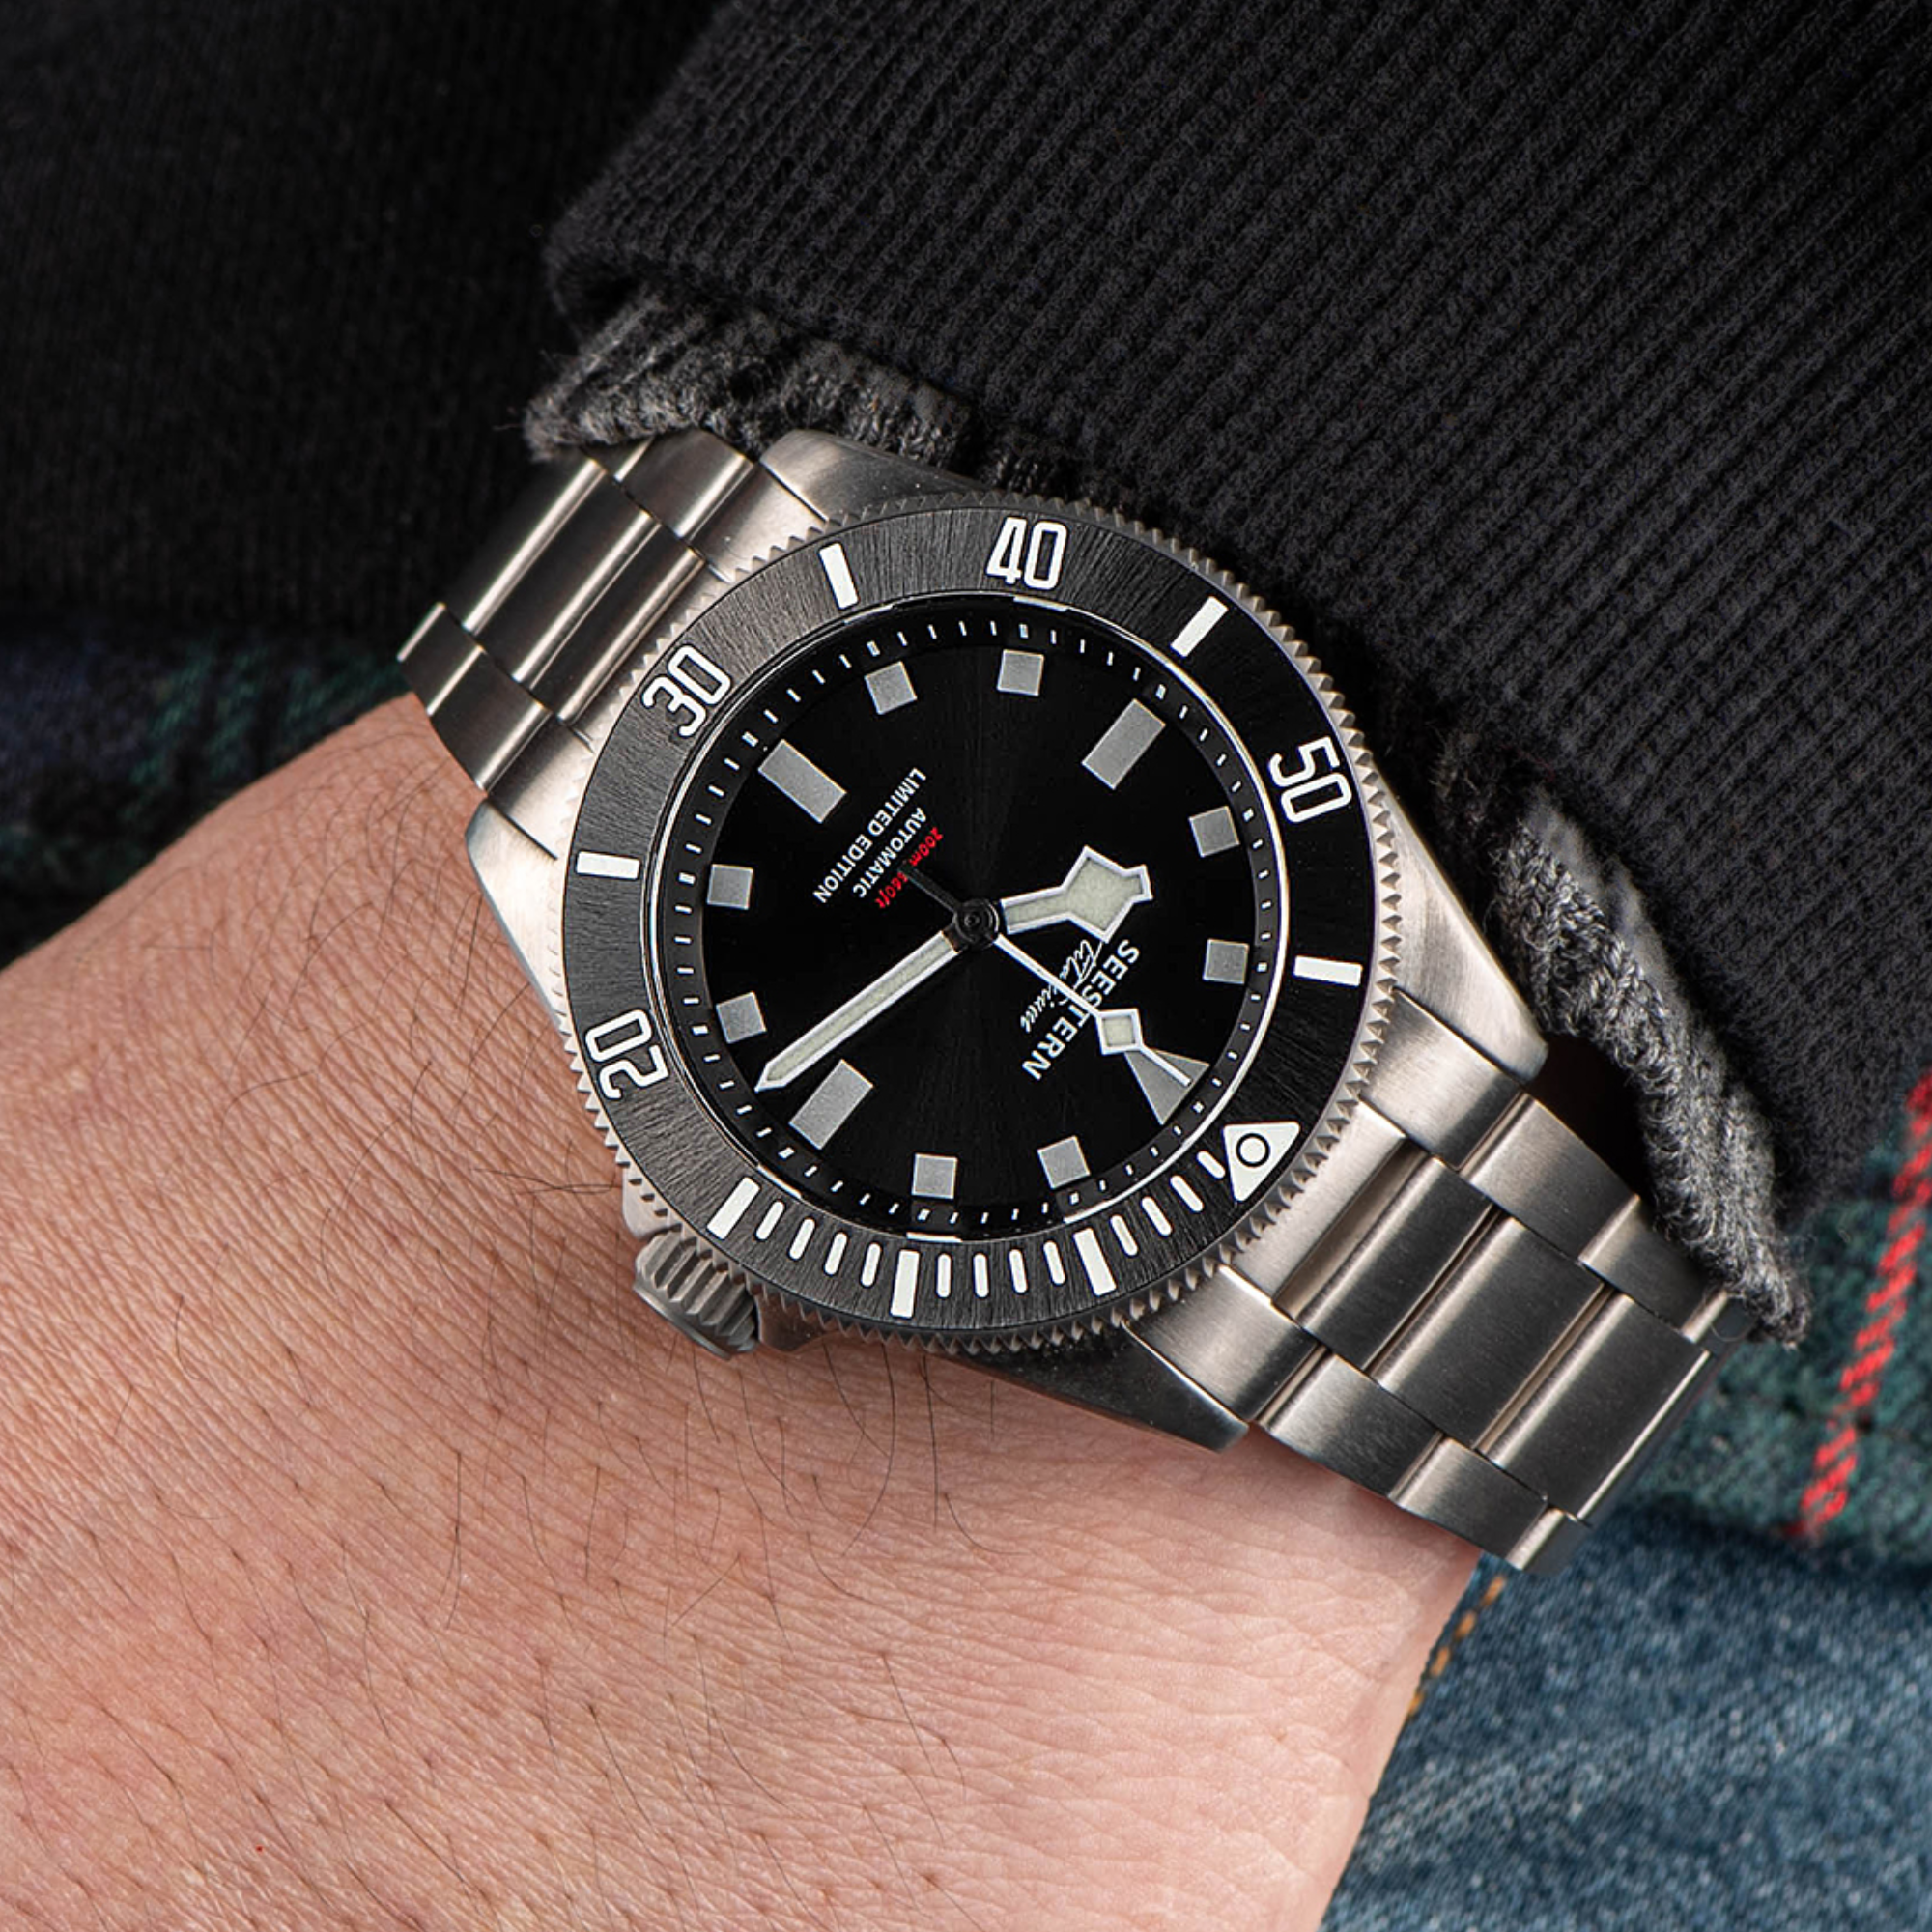 SEESTERN S430 Titanium Diver Watch for Men Automatic Mechanical Wristwatch NH38 Movement Sapphire Glass 20ATM Waterproof Luminous New - Black